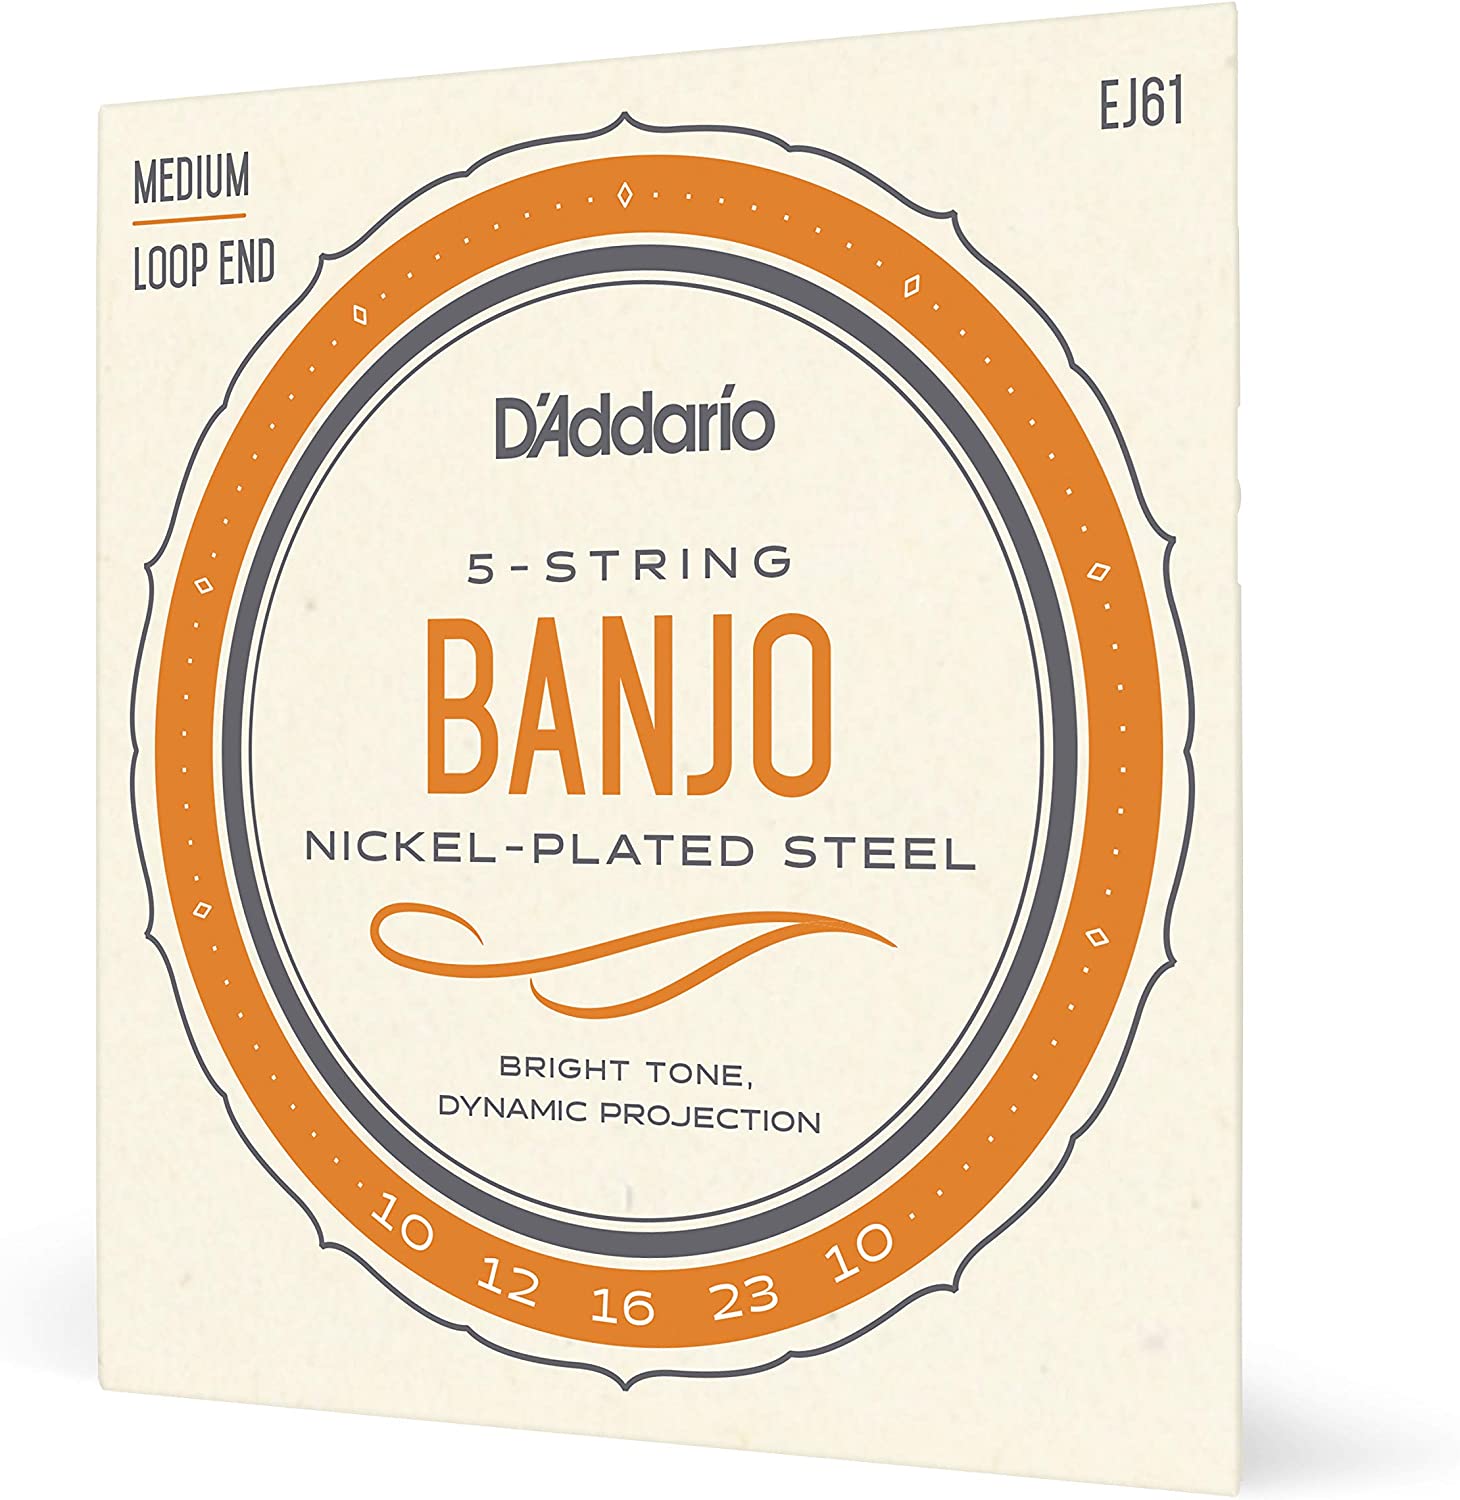 D'Addario EJ61 5-String Banjo Strings, Nickel, Medium 10-23 - EJ61 - Premium banjo strings from D'Addario - Just $5.99! Shop now at Poppa's Music